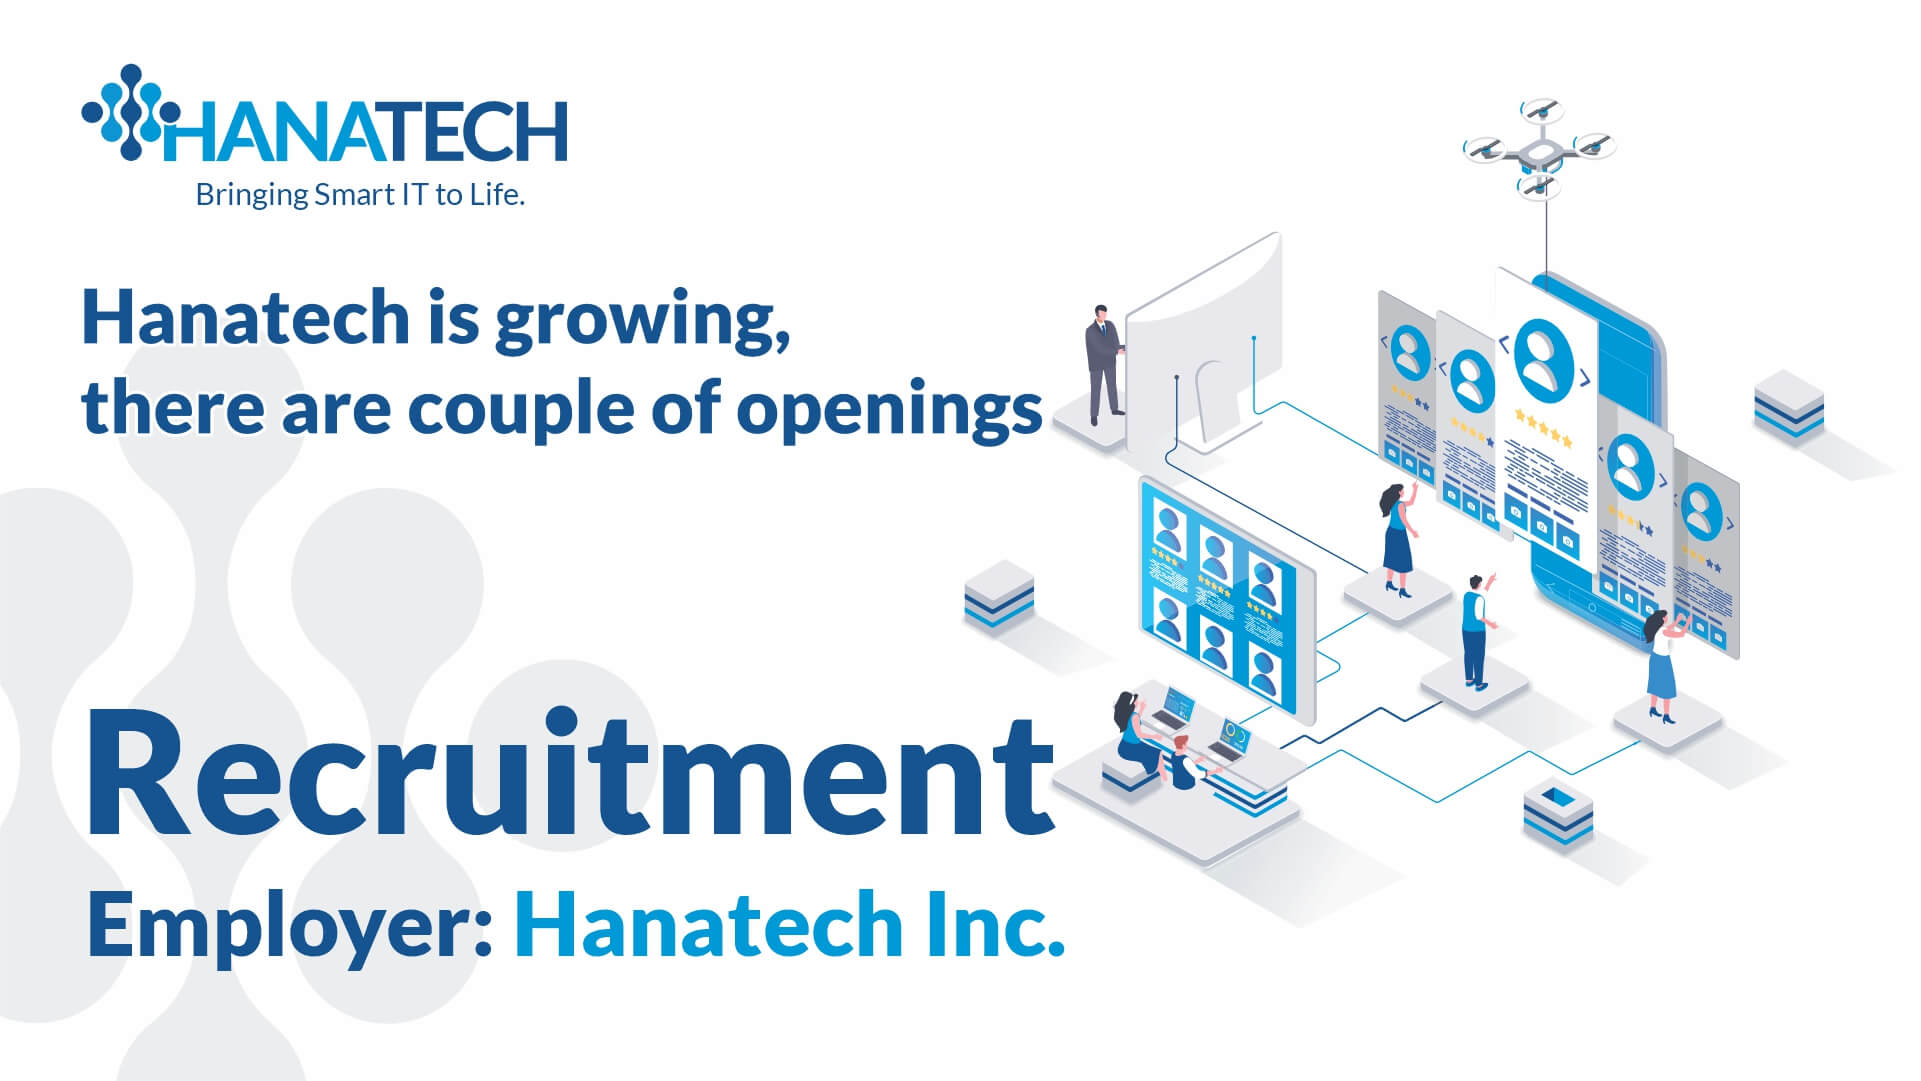 Recruitment in hanatech inc